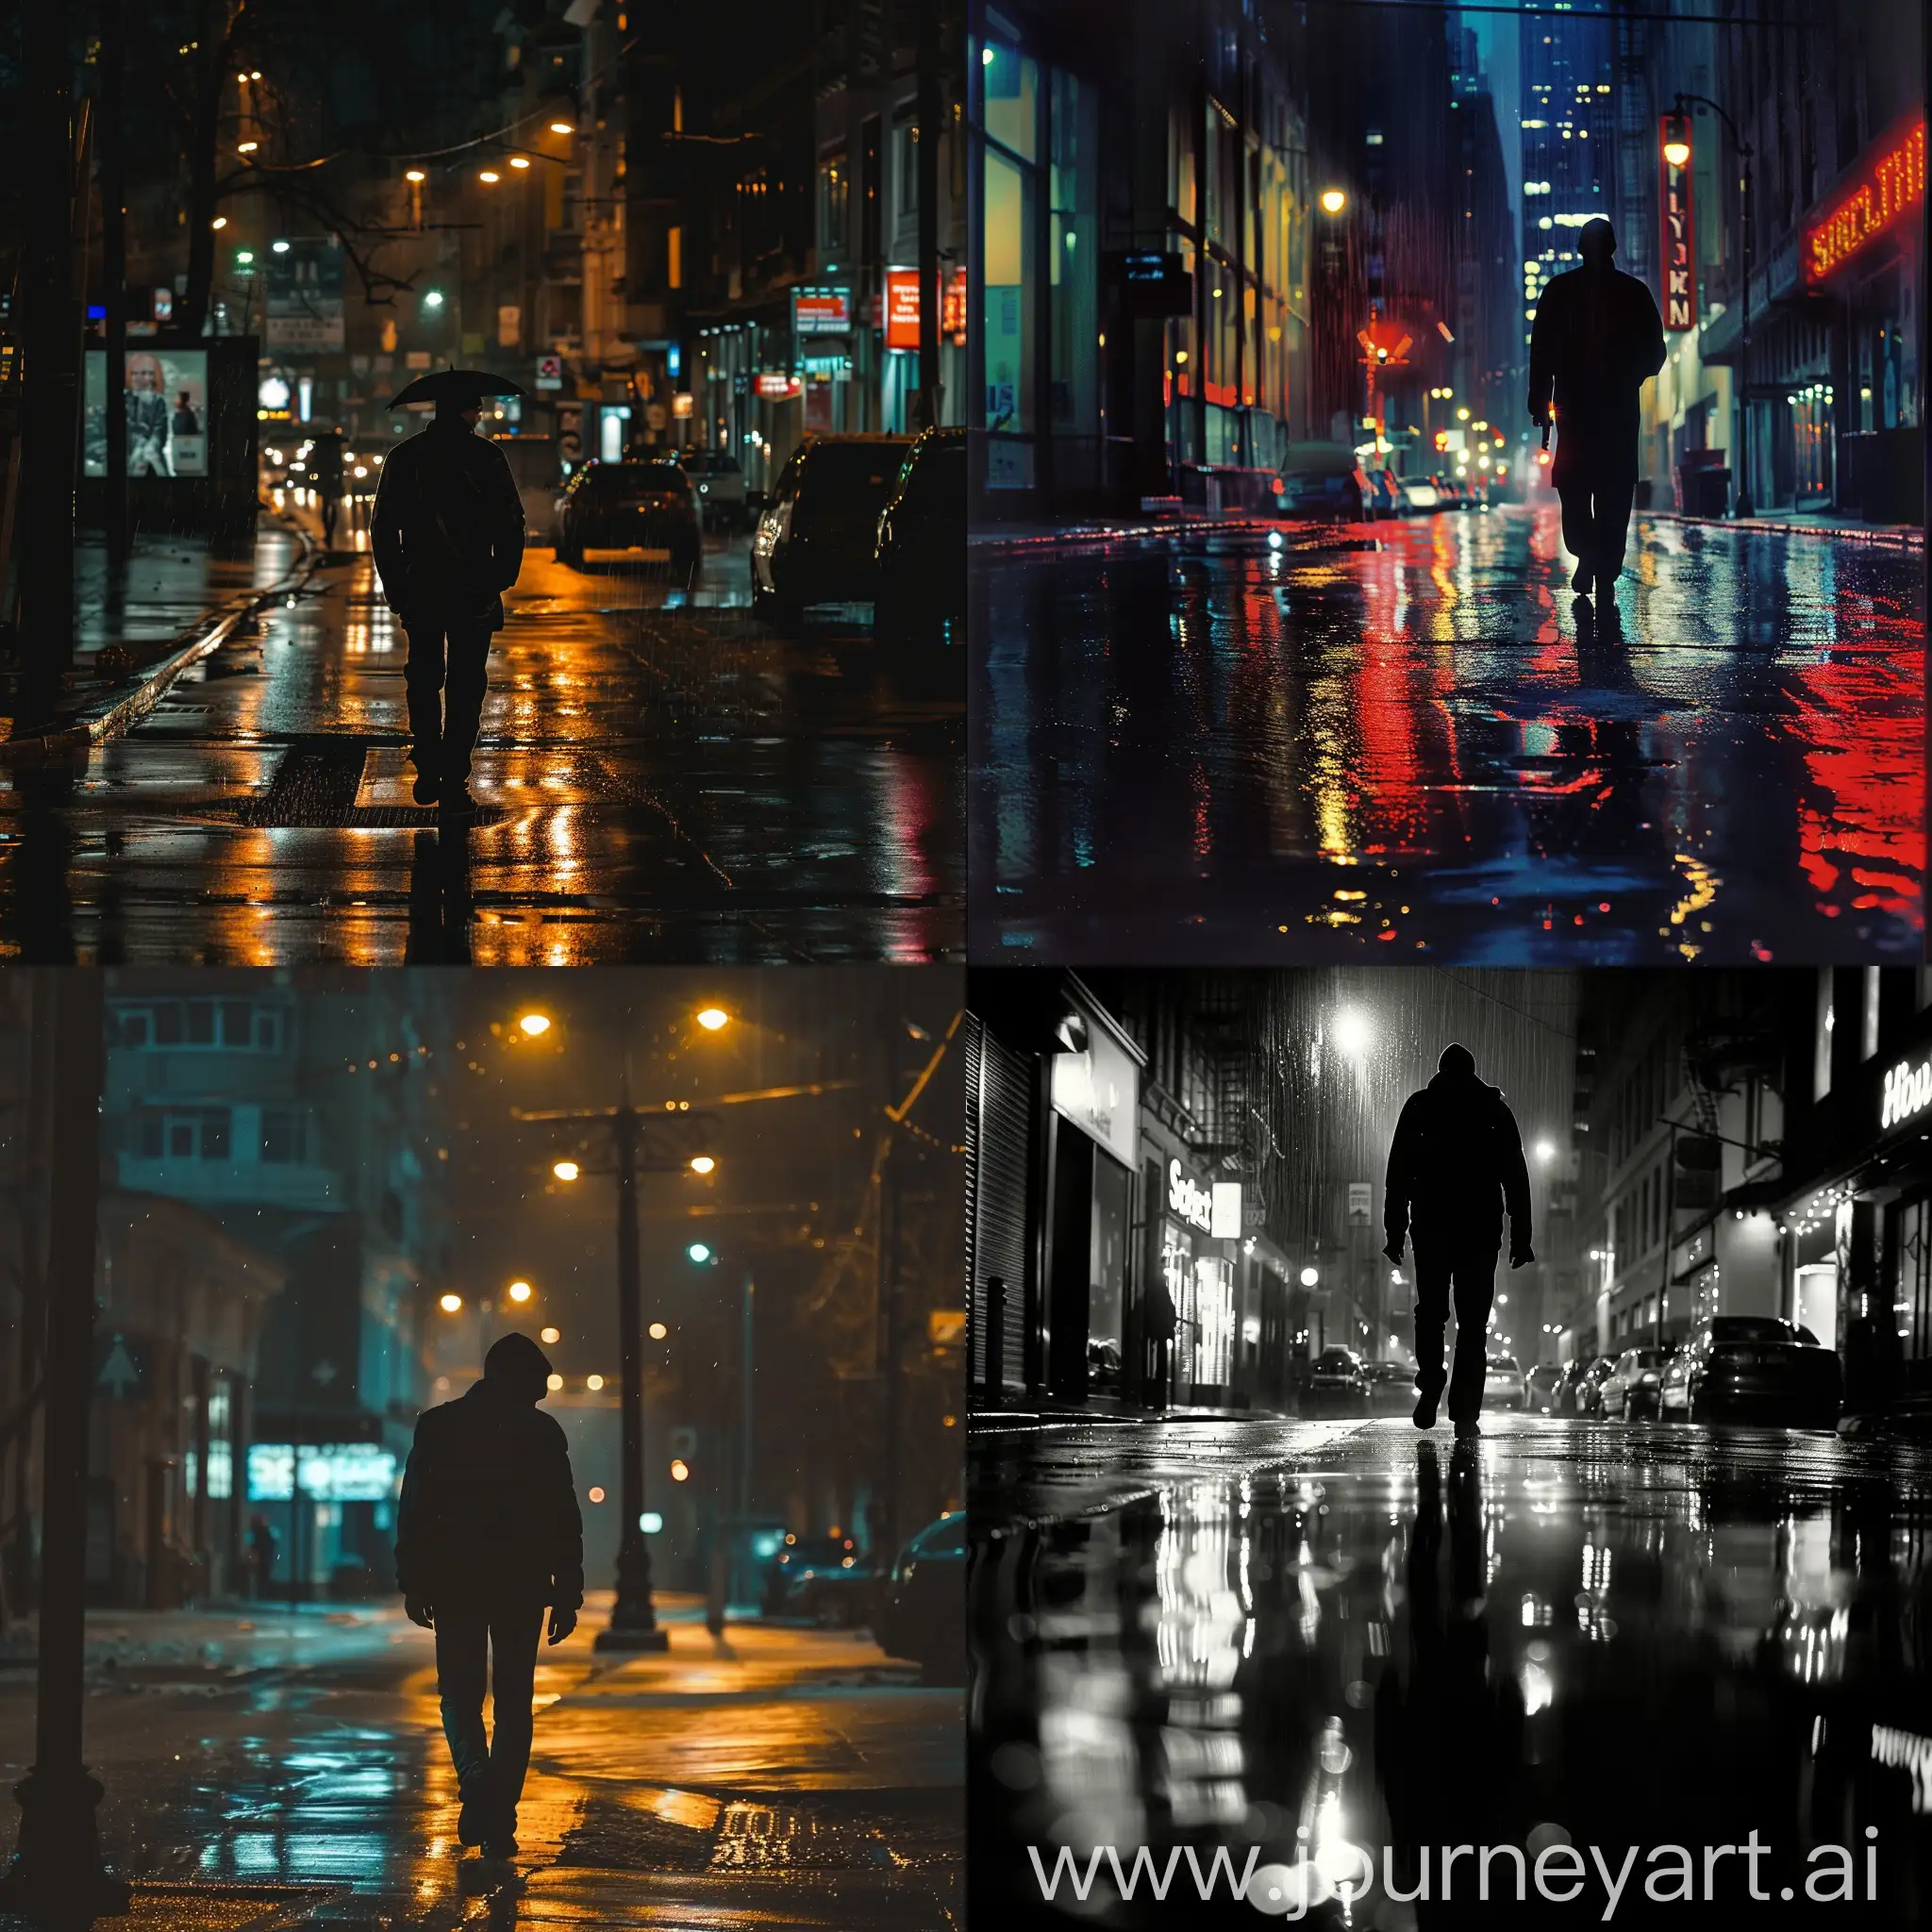 A man walk in the street alone in rainy night